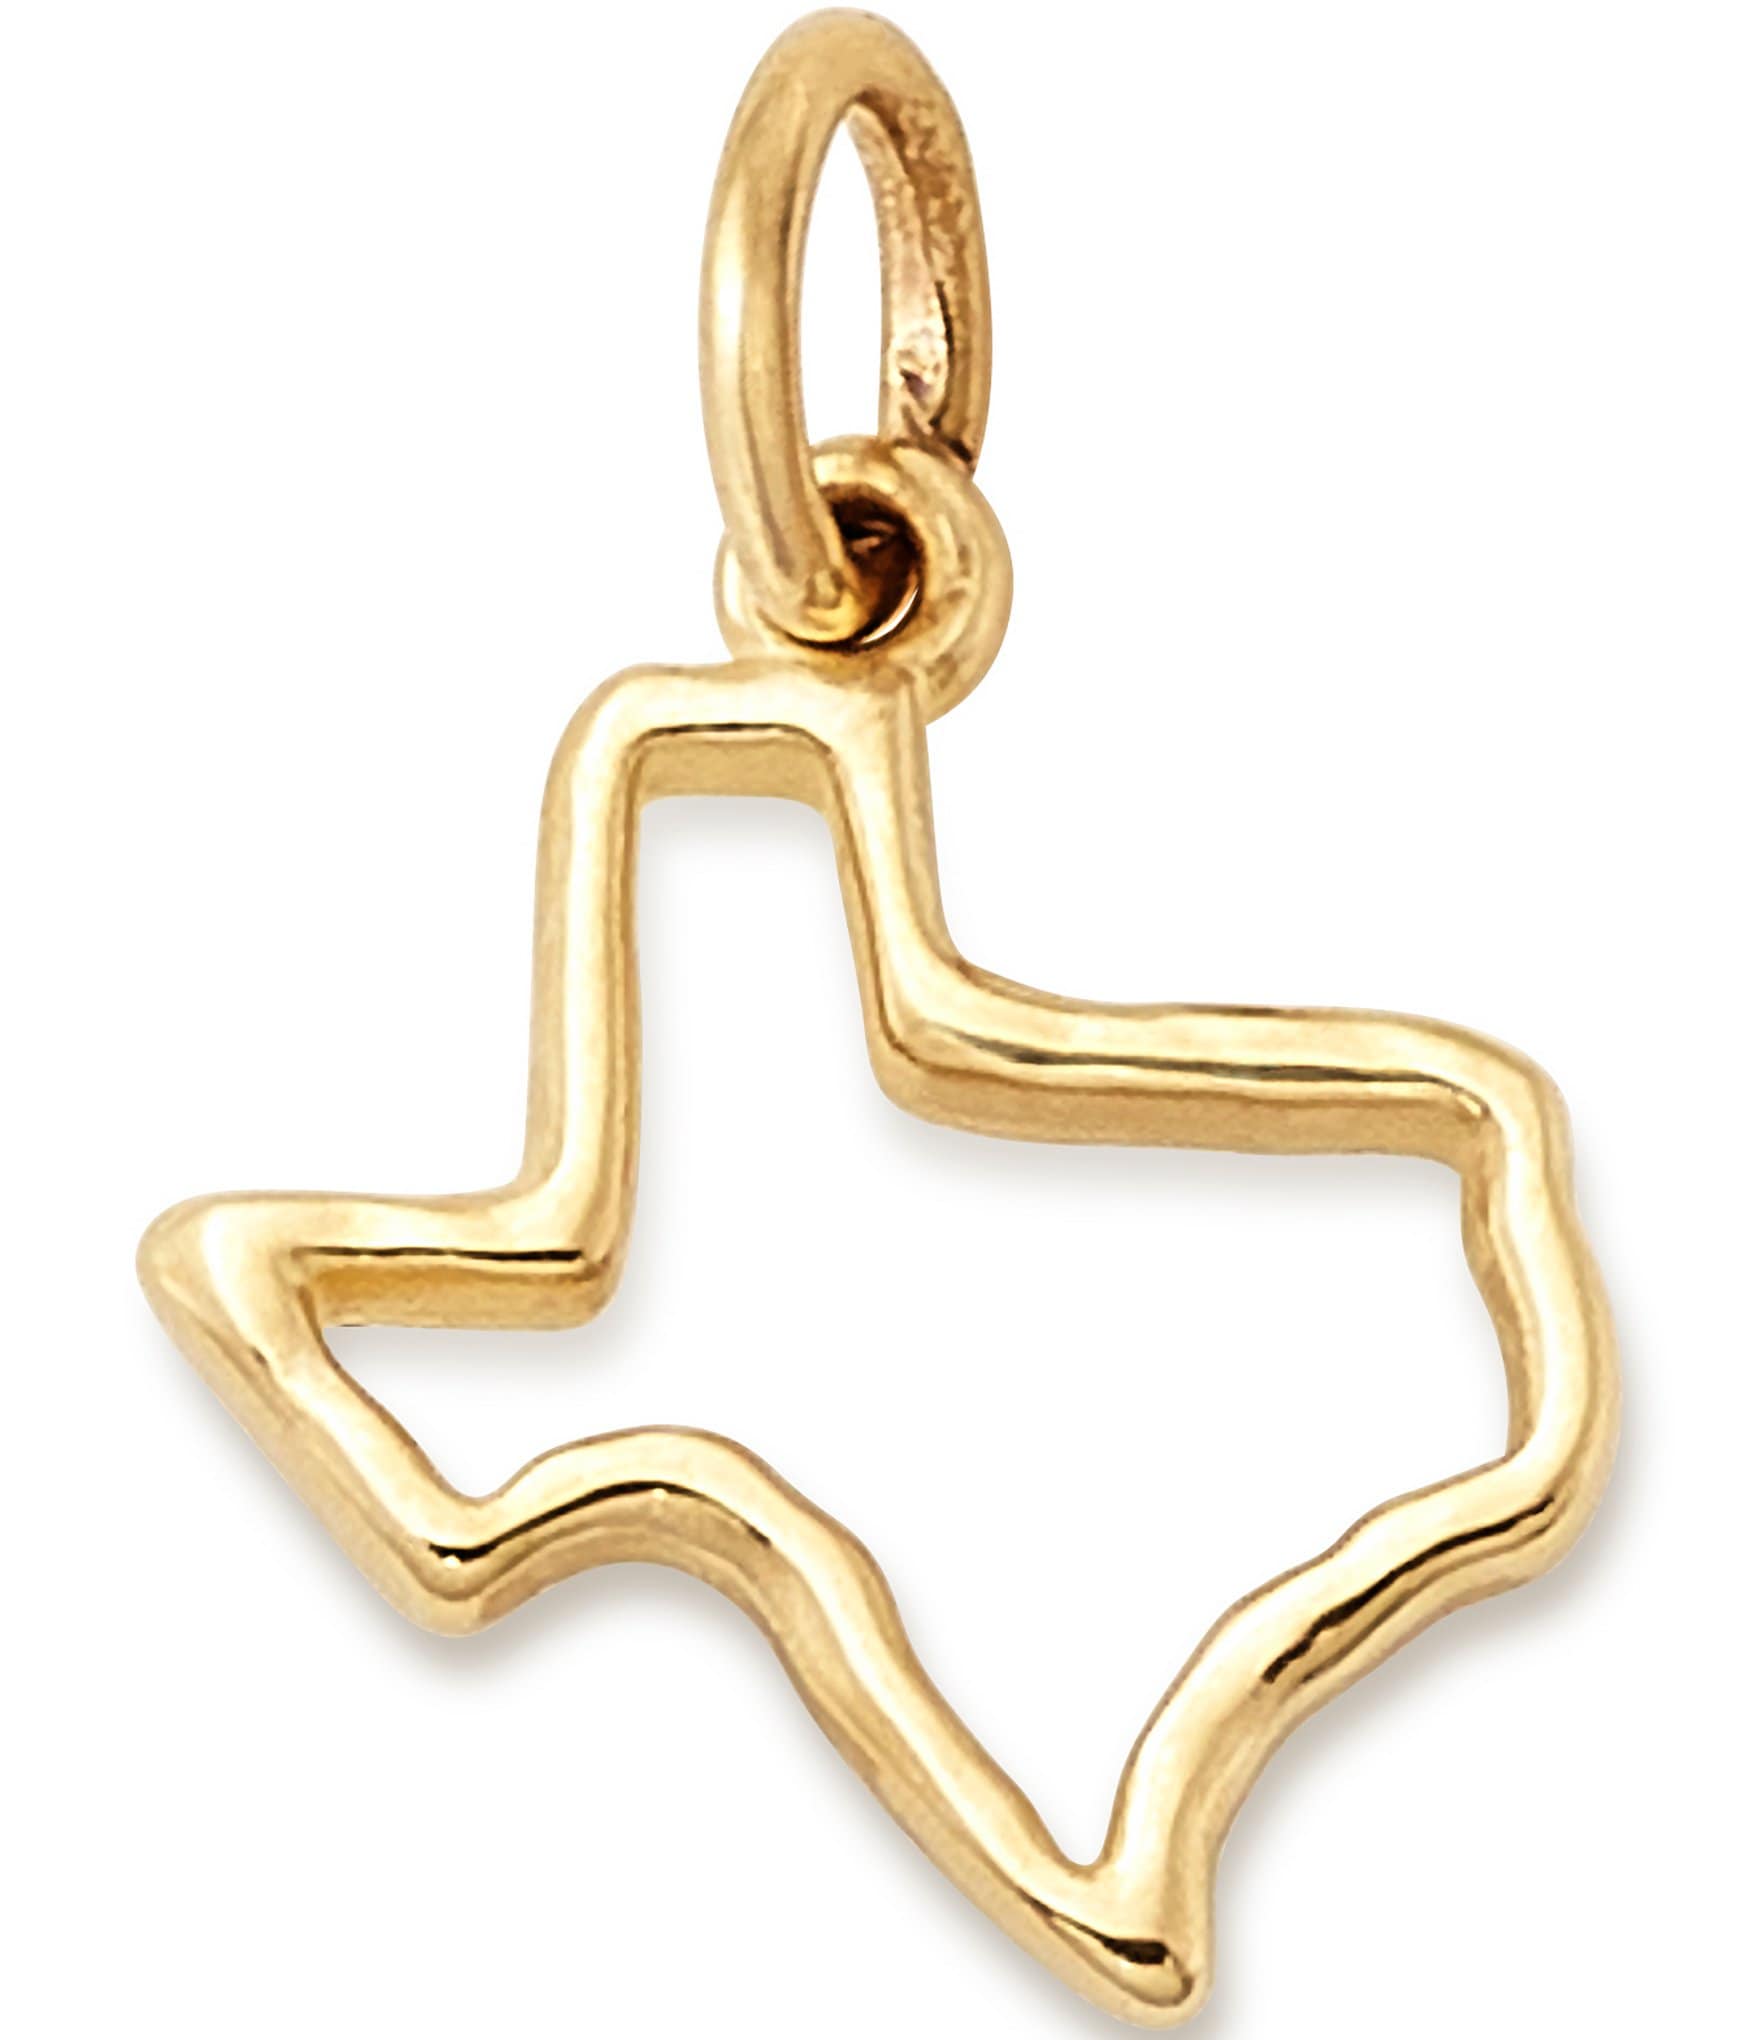 James Avery Forged Gold Link Charm Bracelet - Medium